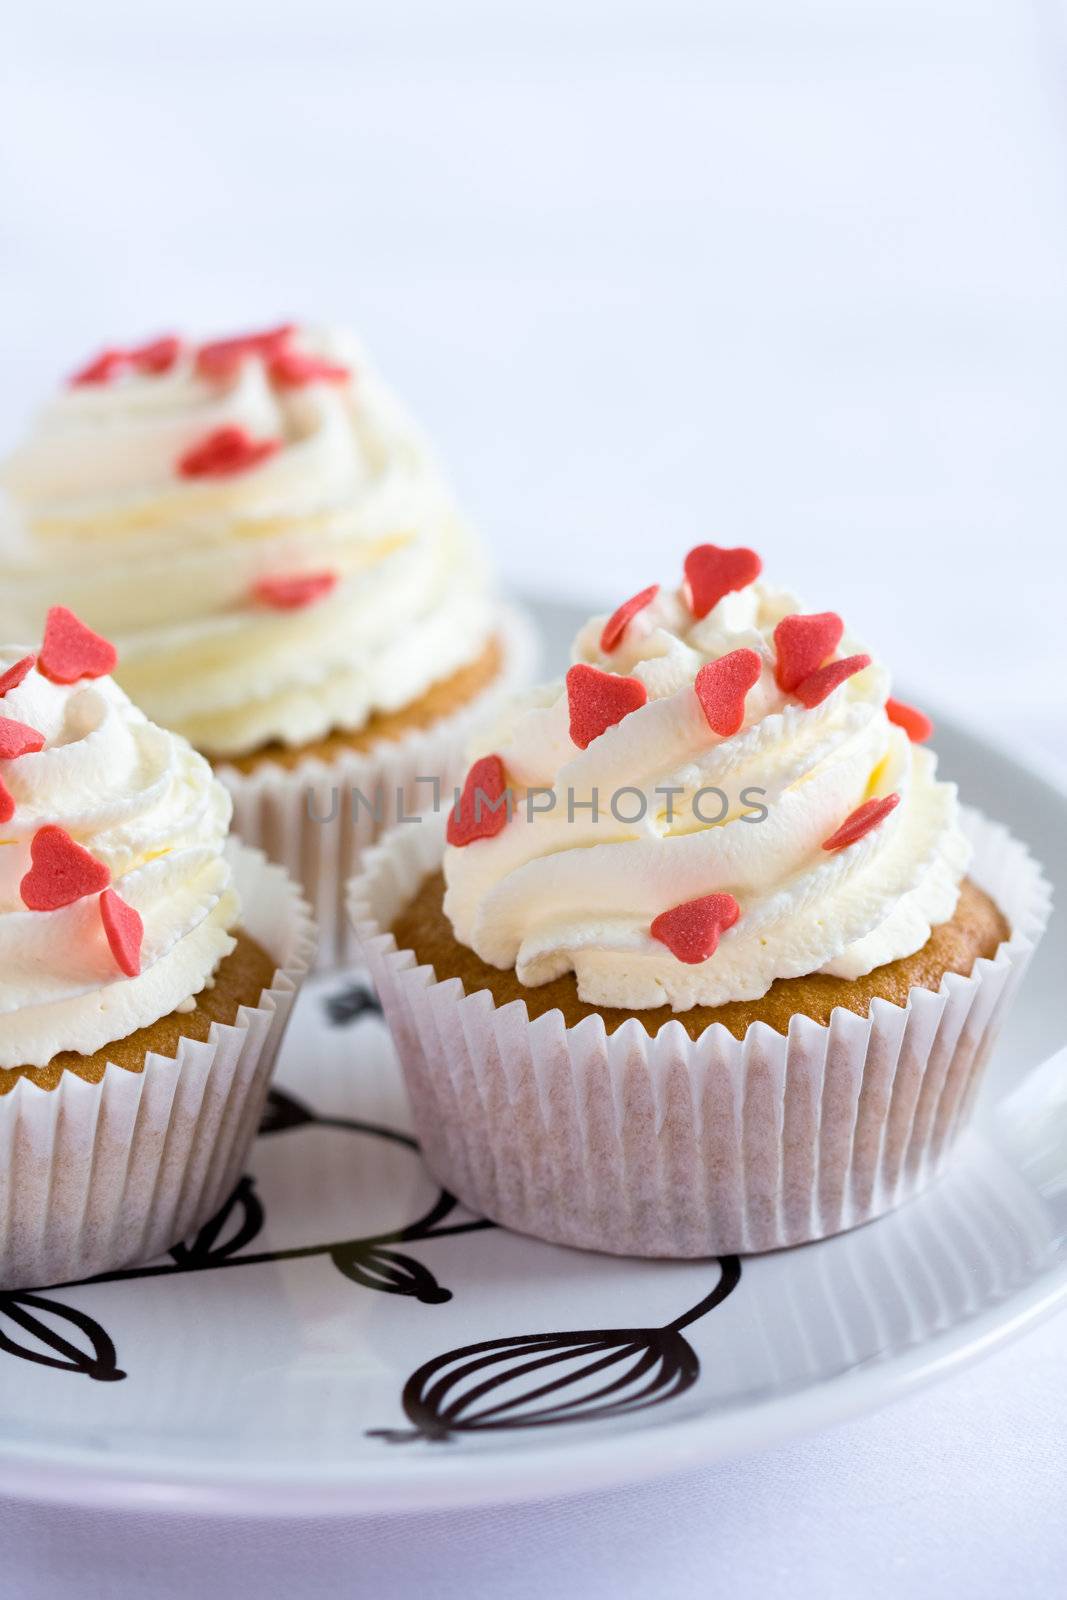 Loveheart cupcakes by RuthBlack